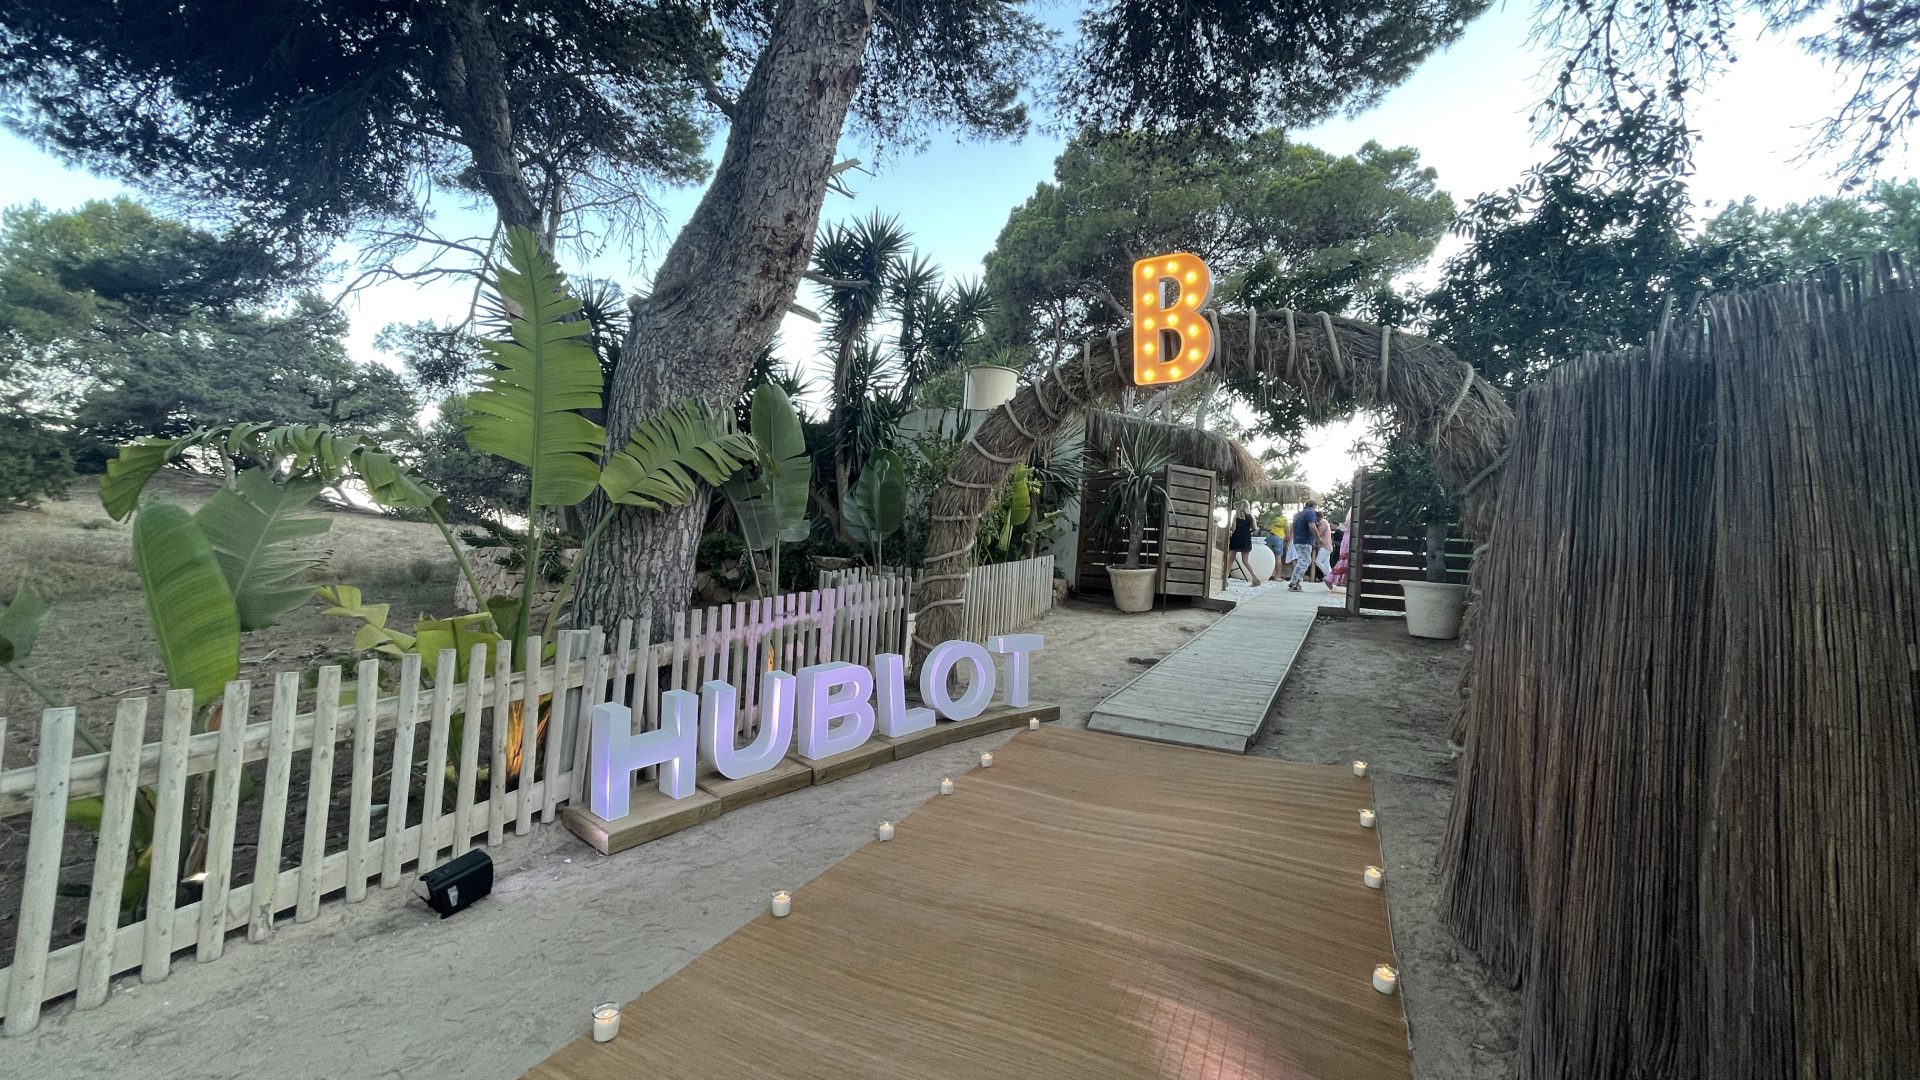 Hublot at Beso Beach Ibiza